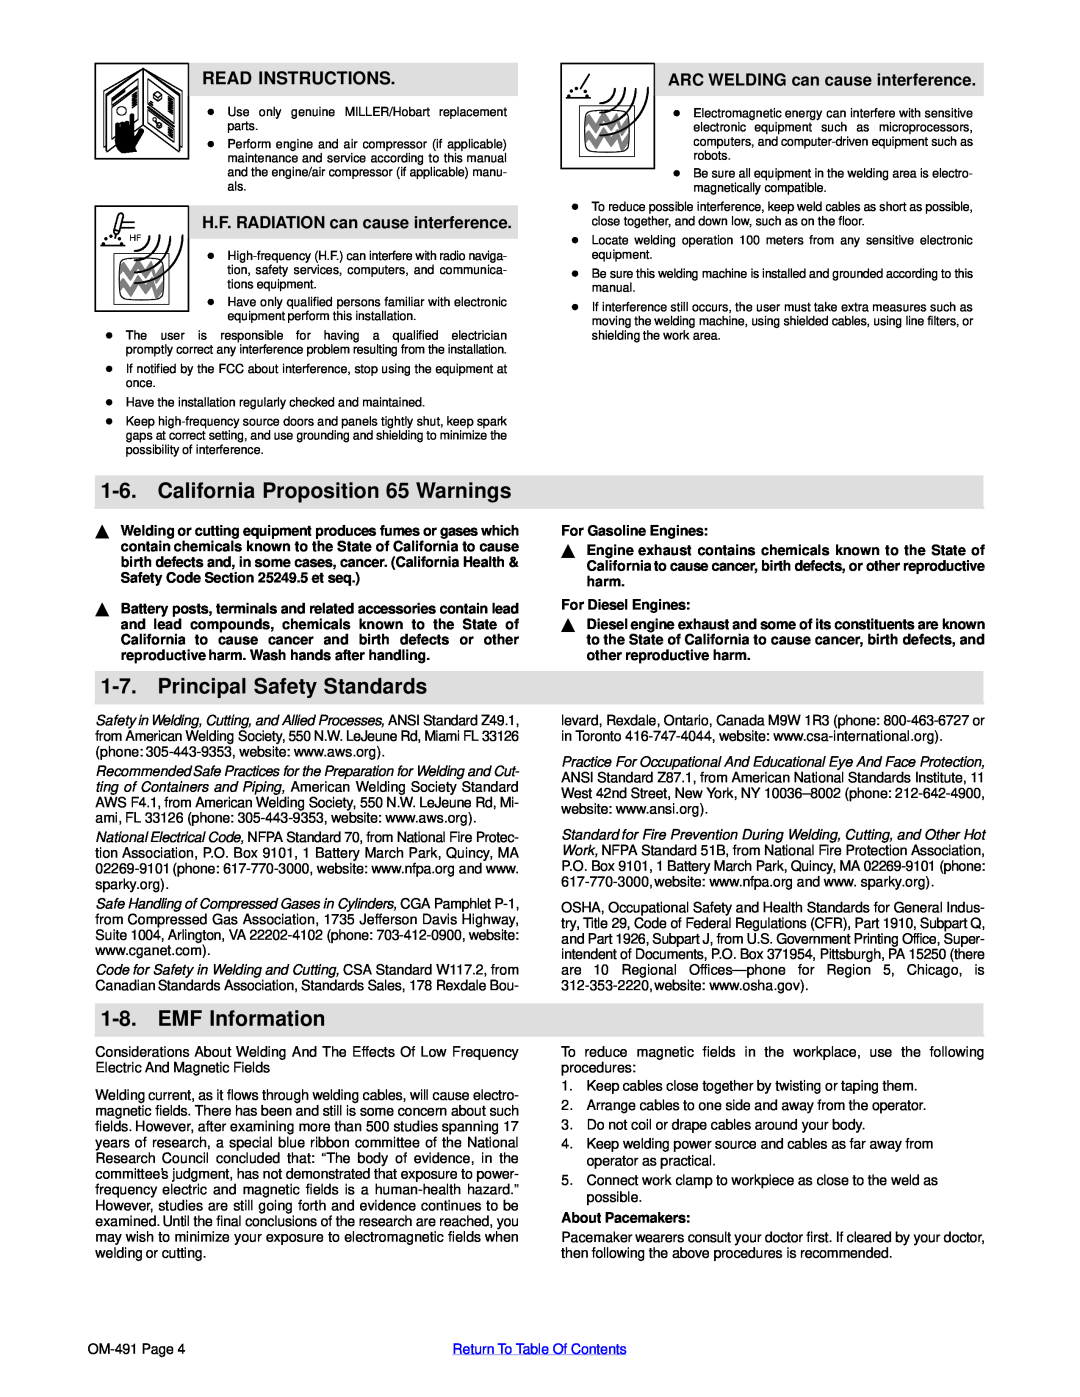 Miller Electric Big Blue 502P manual California Proposition 65 Warnings, Principal Safety Standards, EMF Information 